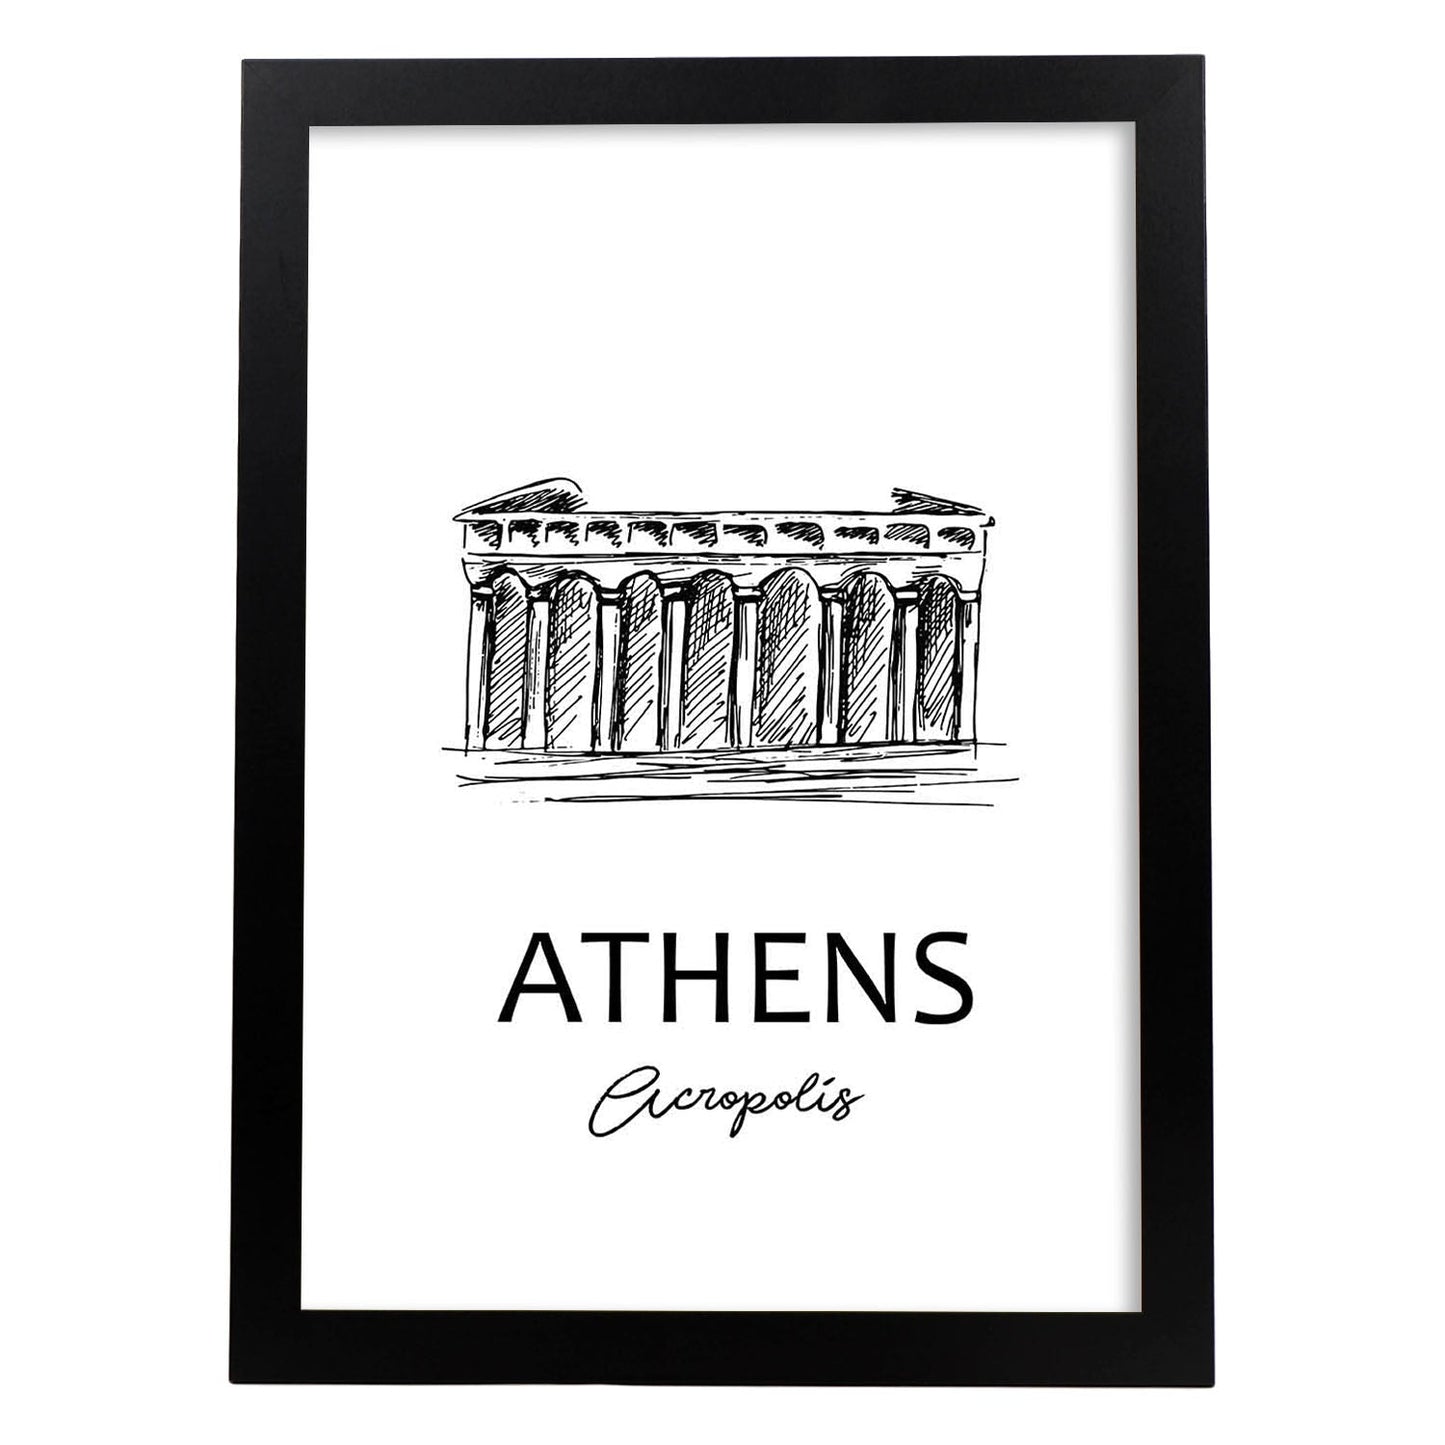 Poster de Atenas - Acropolis. Láminas con monumentos de ciudades.-Artwork-Nacnic-A3-Marco Negro-Nacnic Estudio SL